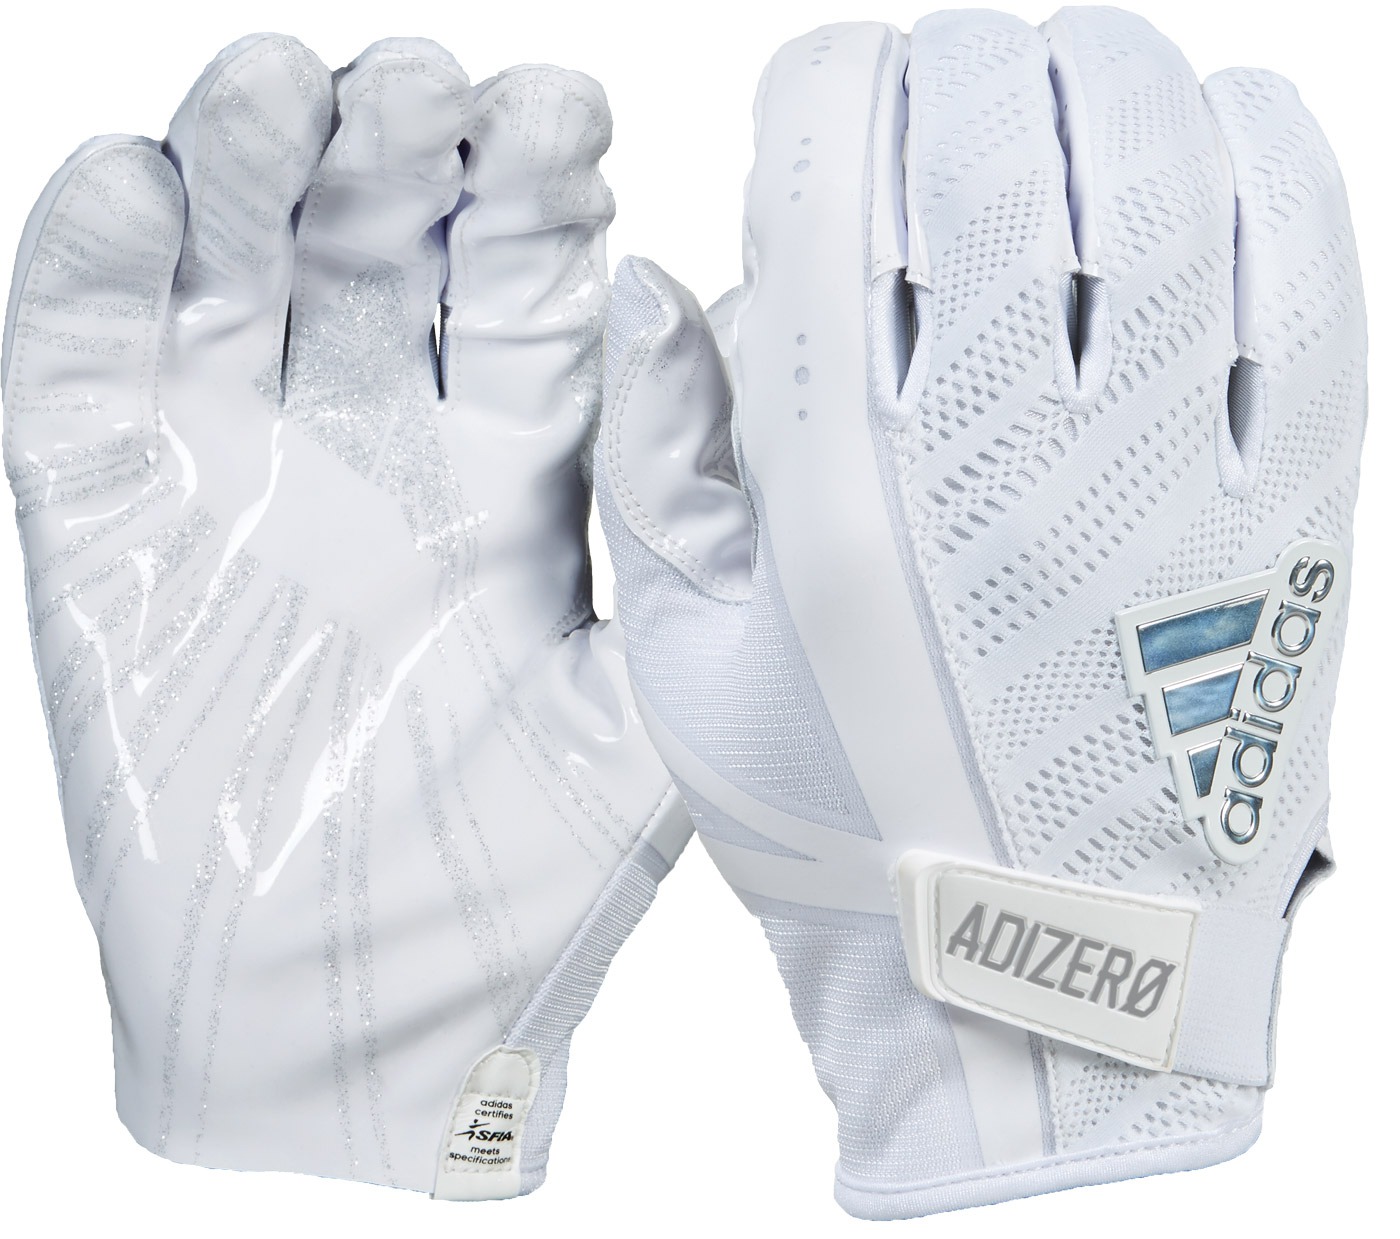 Adidas Adizero 5-Star 6.0 Adult Football Receiver Gloves - Walmart.com -  Walmart.com